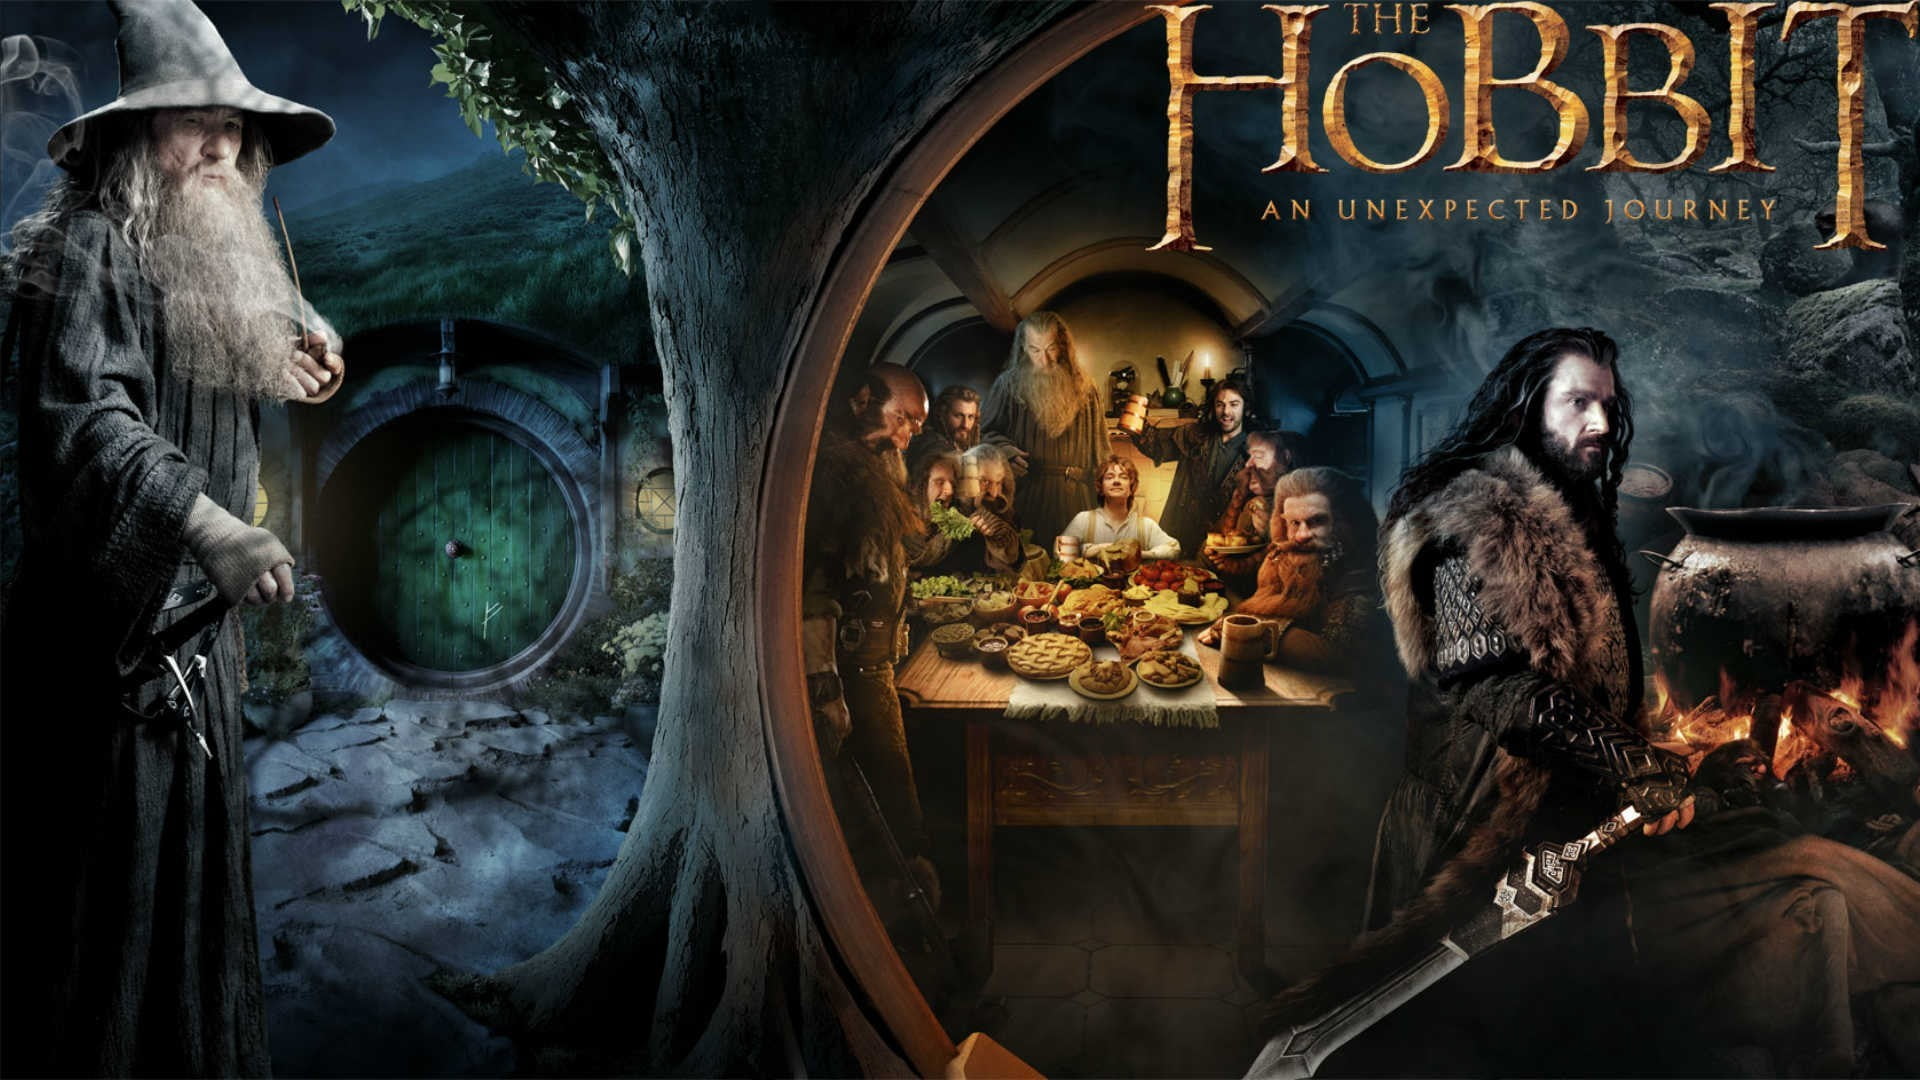 The Hobbit wallpaper, The Hobbit: An Unexpected Journey, movies